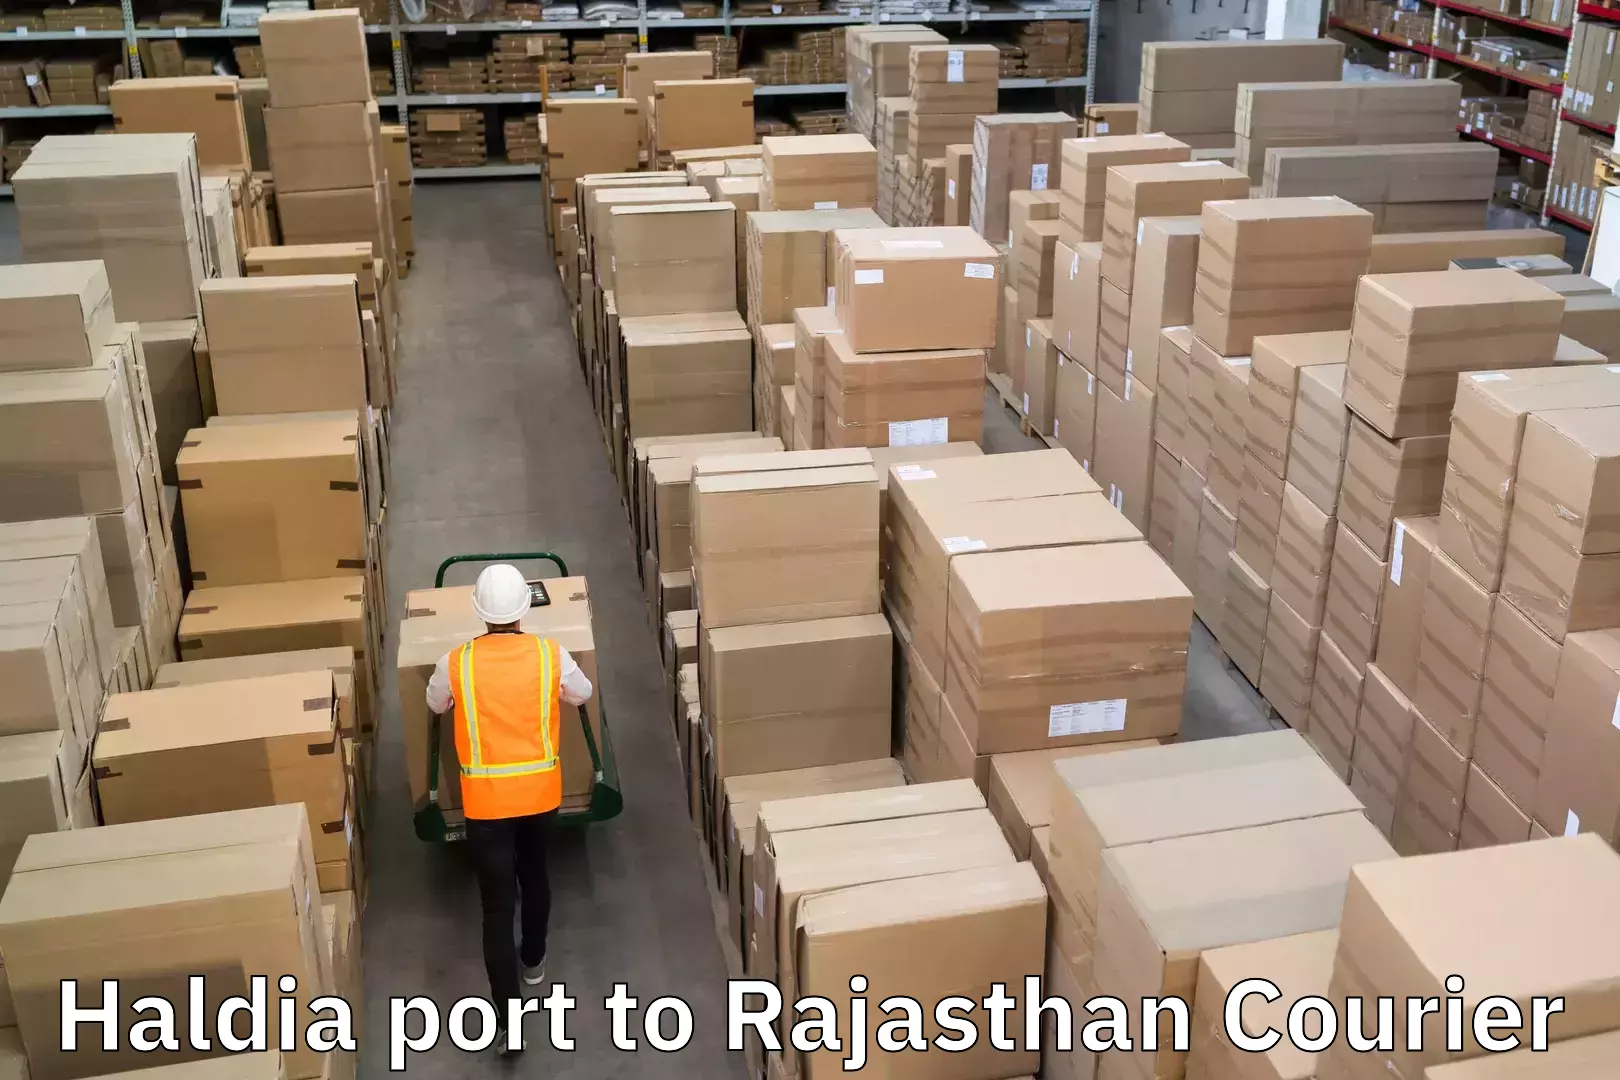 High-speed parcel service Haldia port to Rajasthan